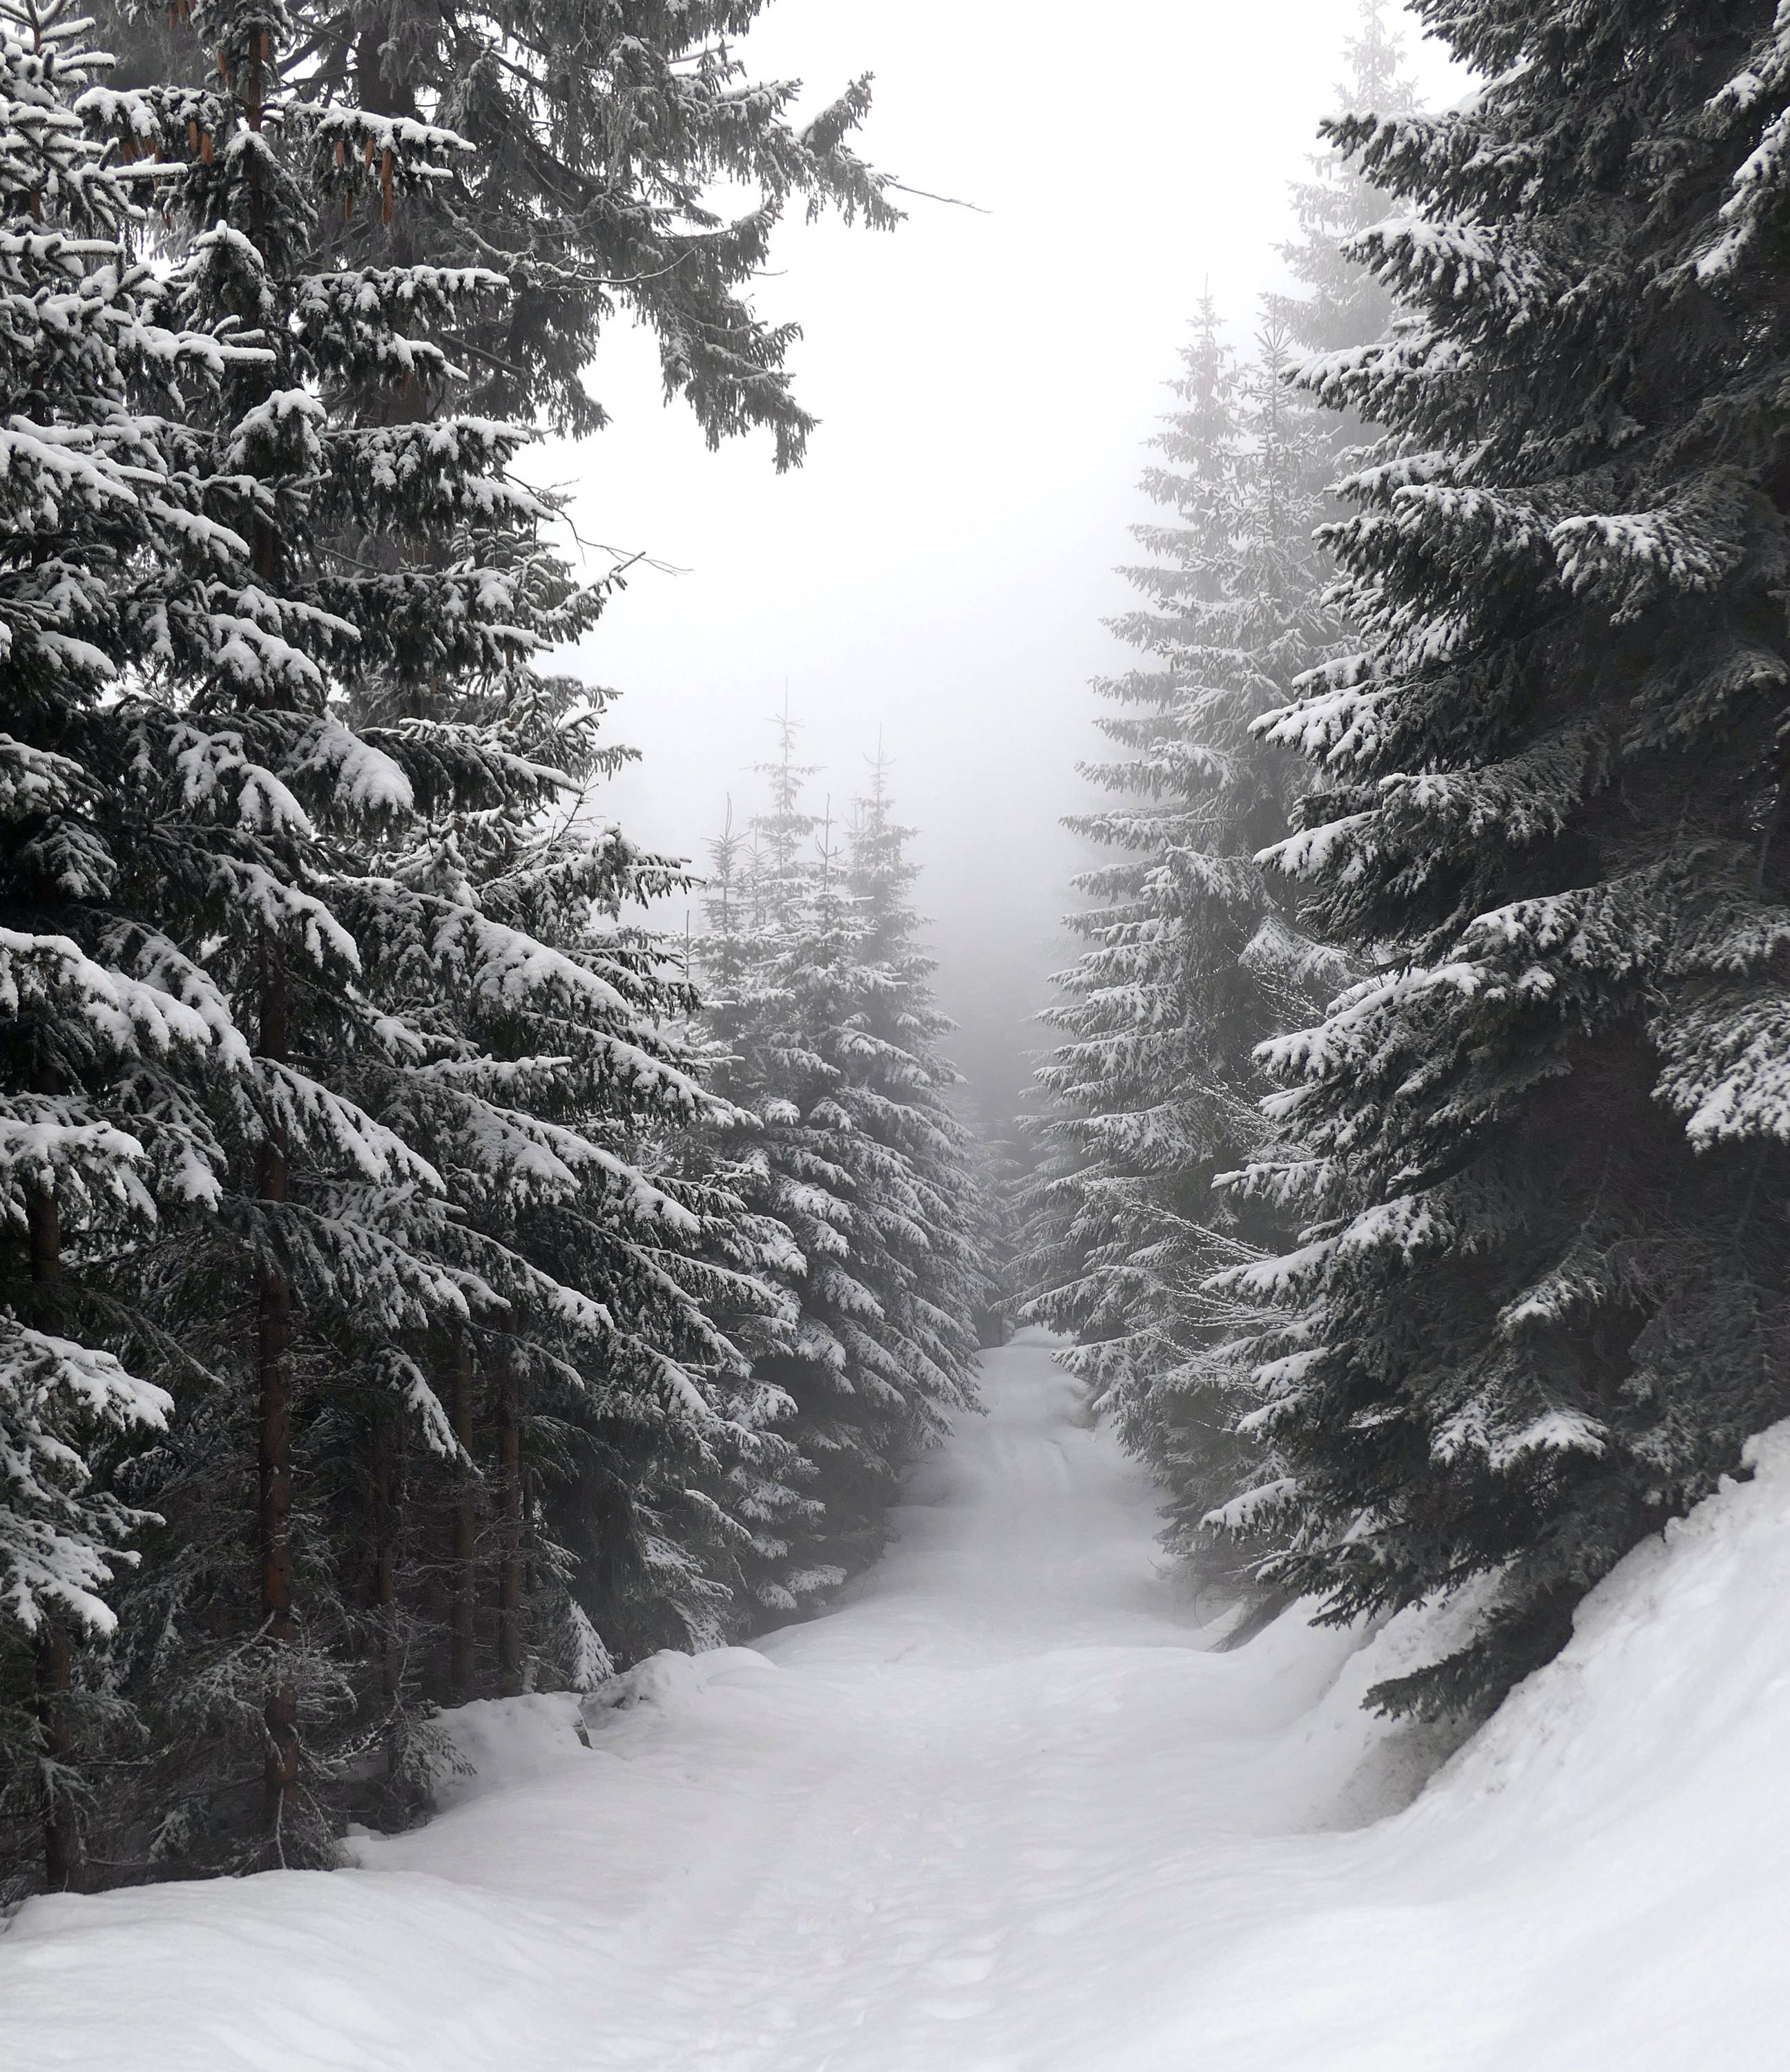 snowy pine forest